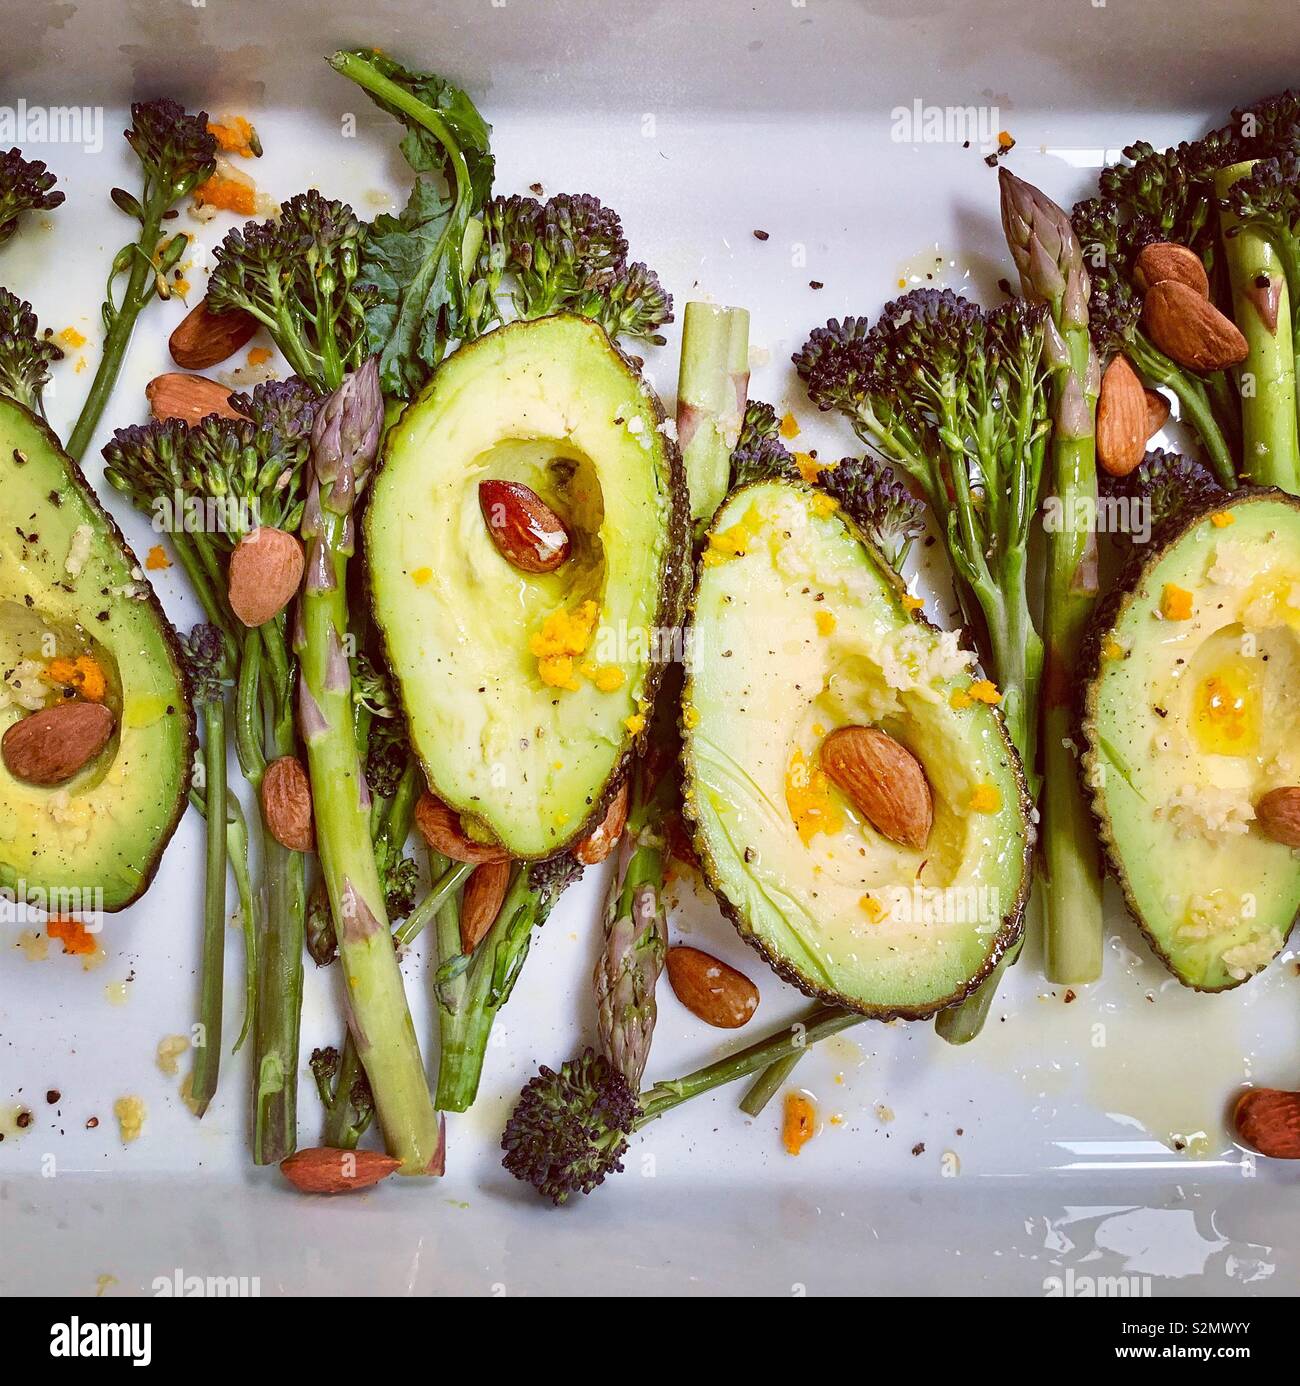 Roasted Avocado and Asparagus Stock Photo